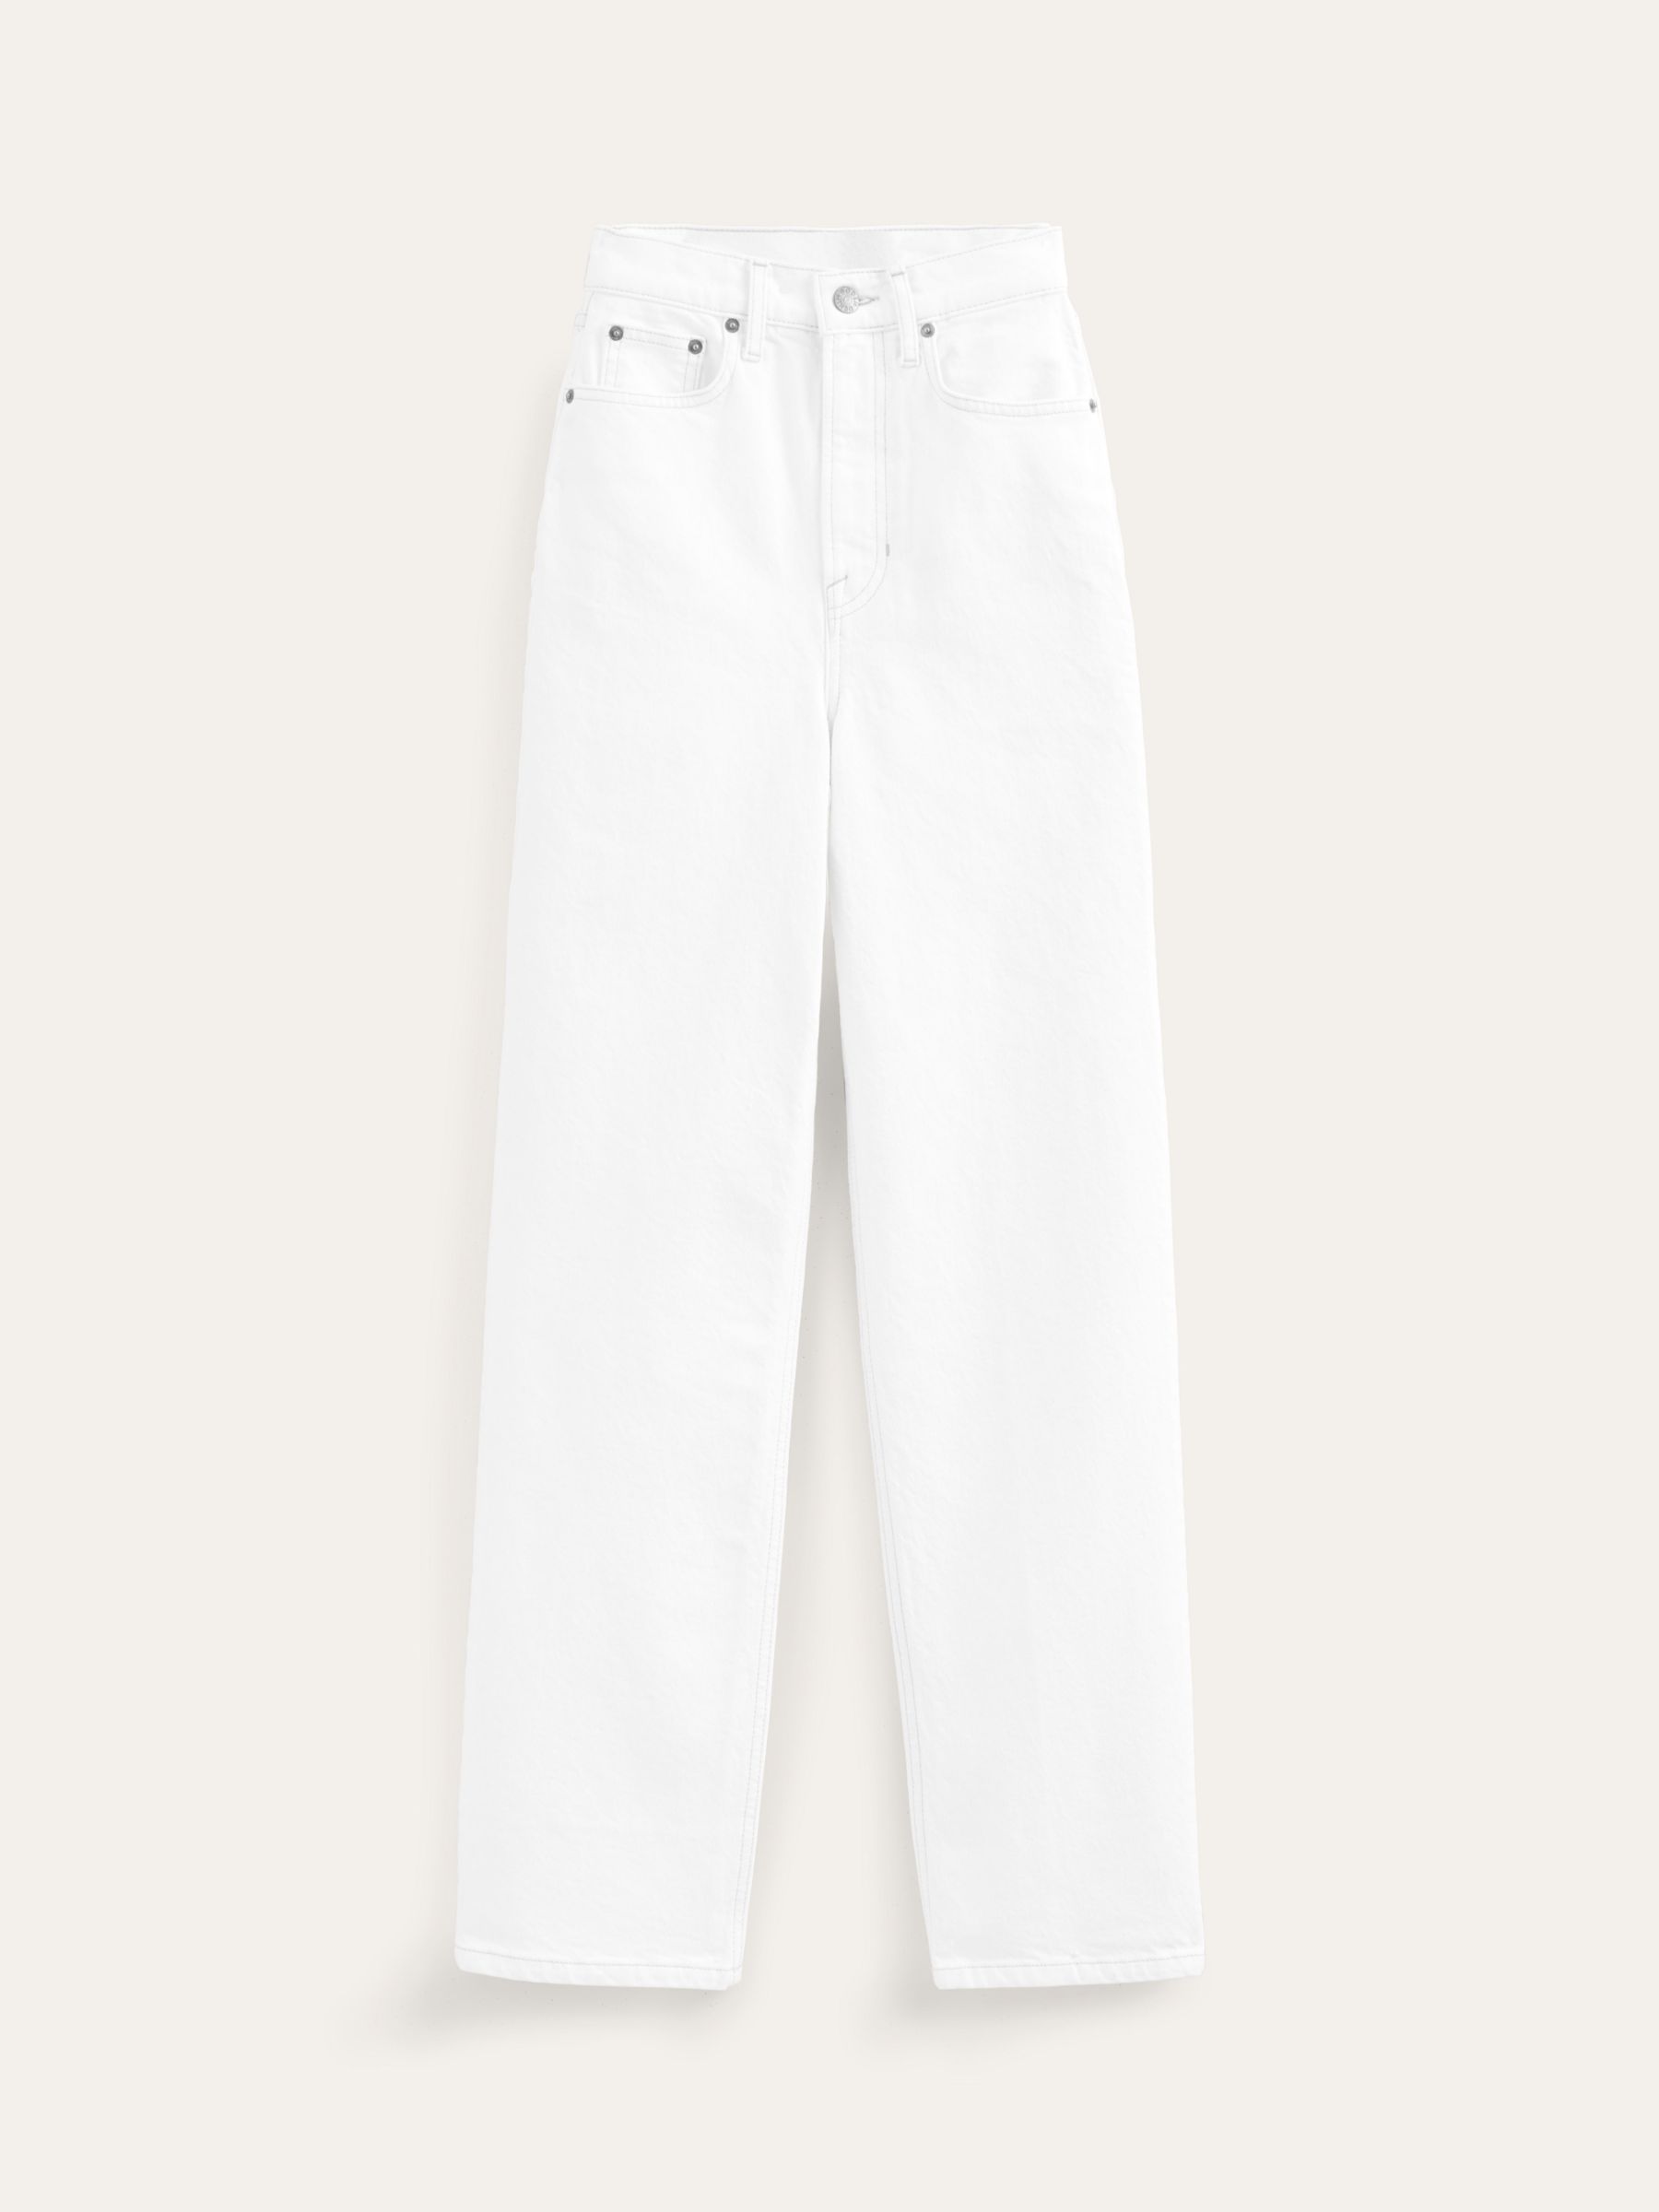 Boden High Rise Straight Leg Jeans, White, W31/L32